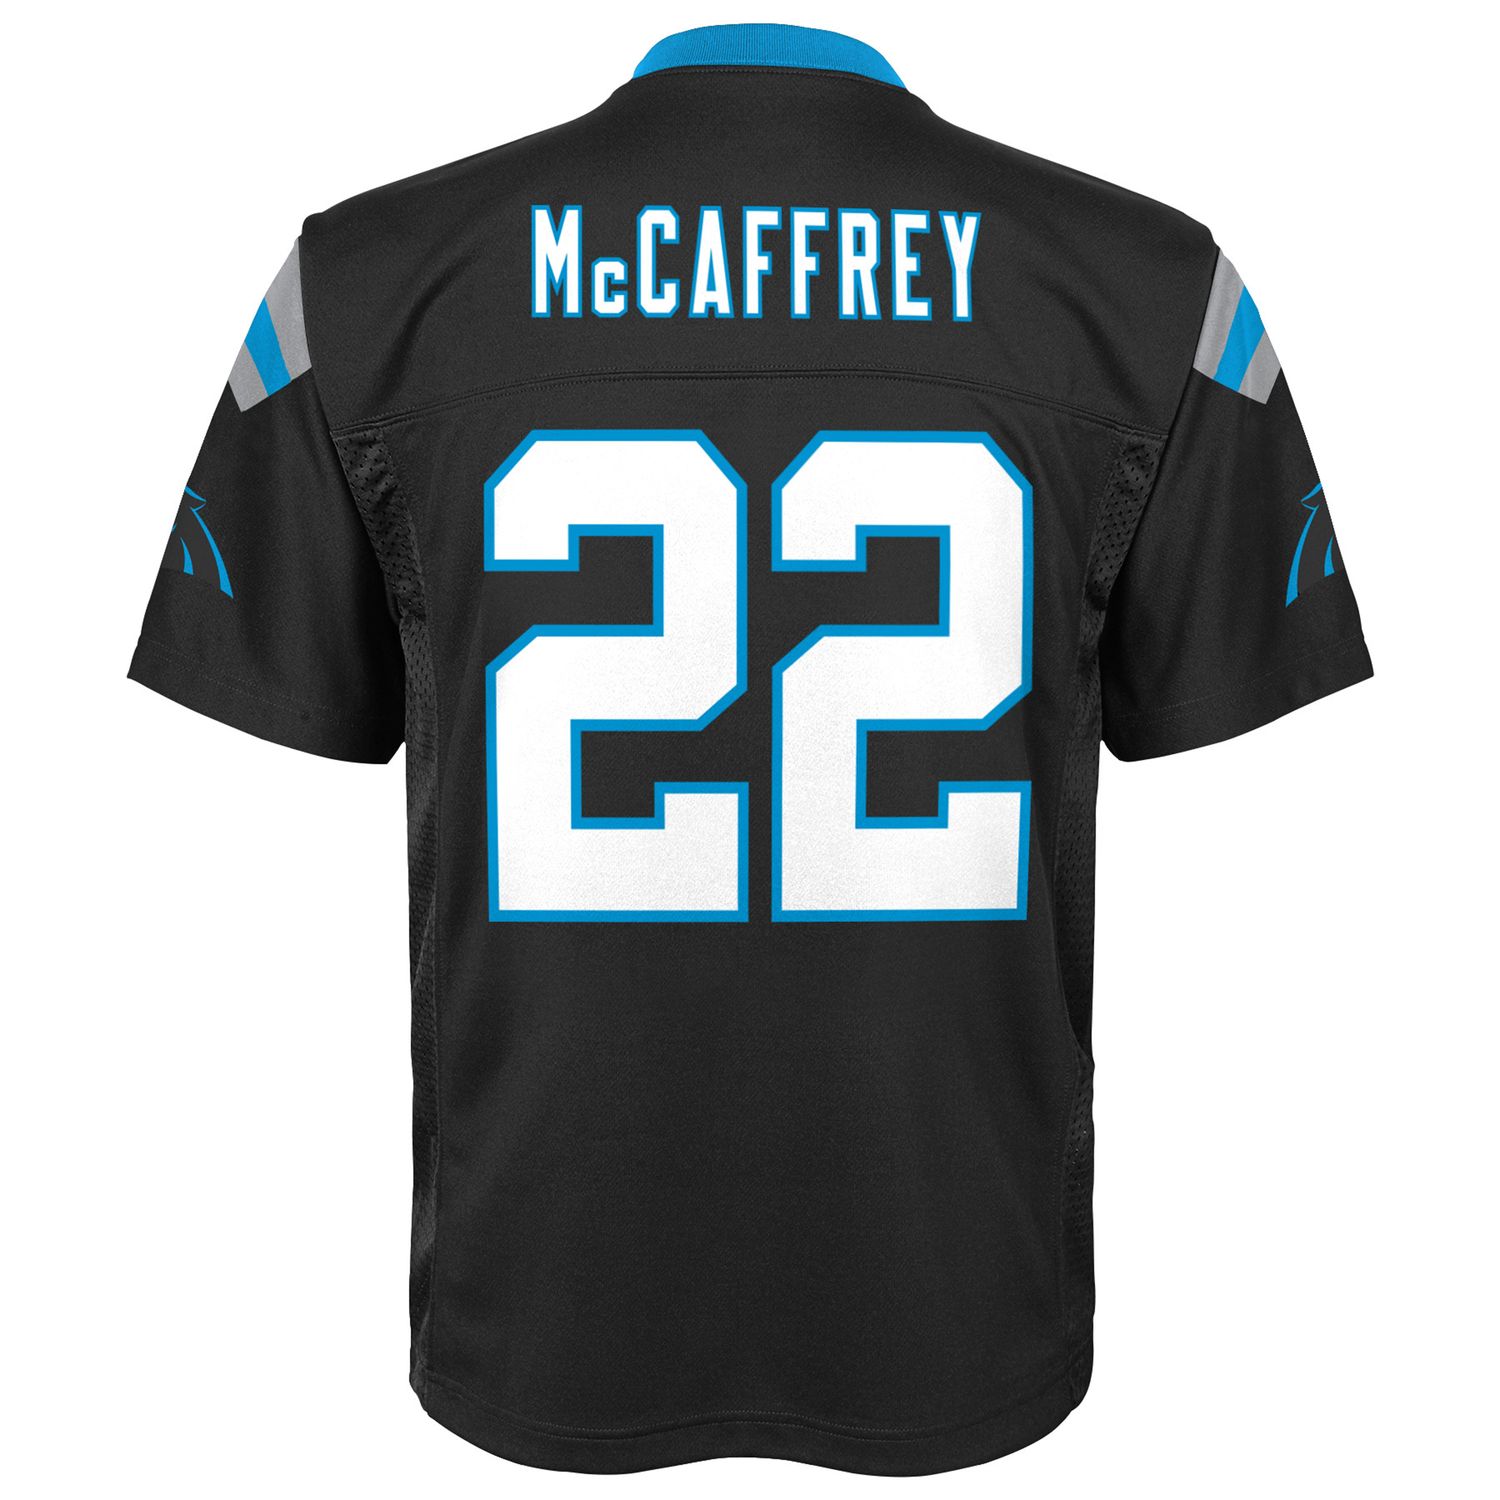 mccaffrey jersey